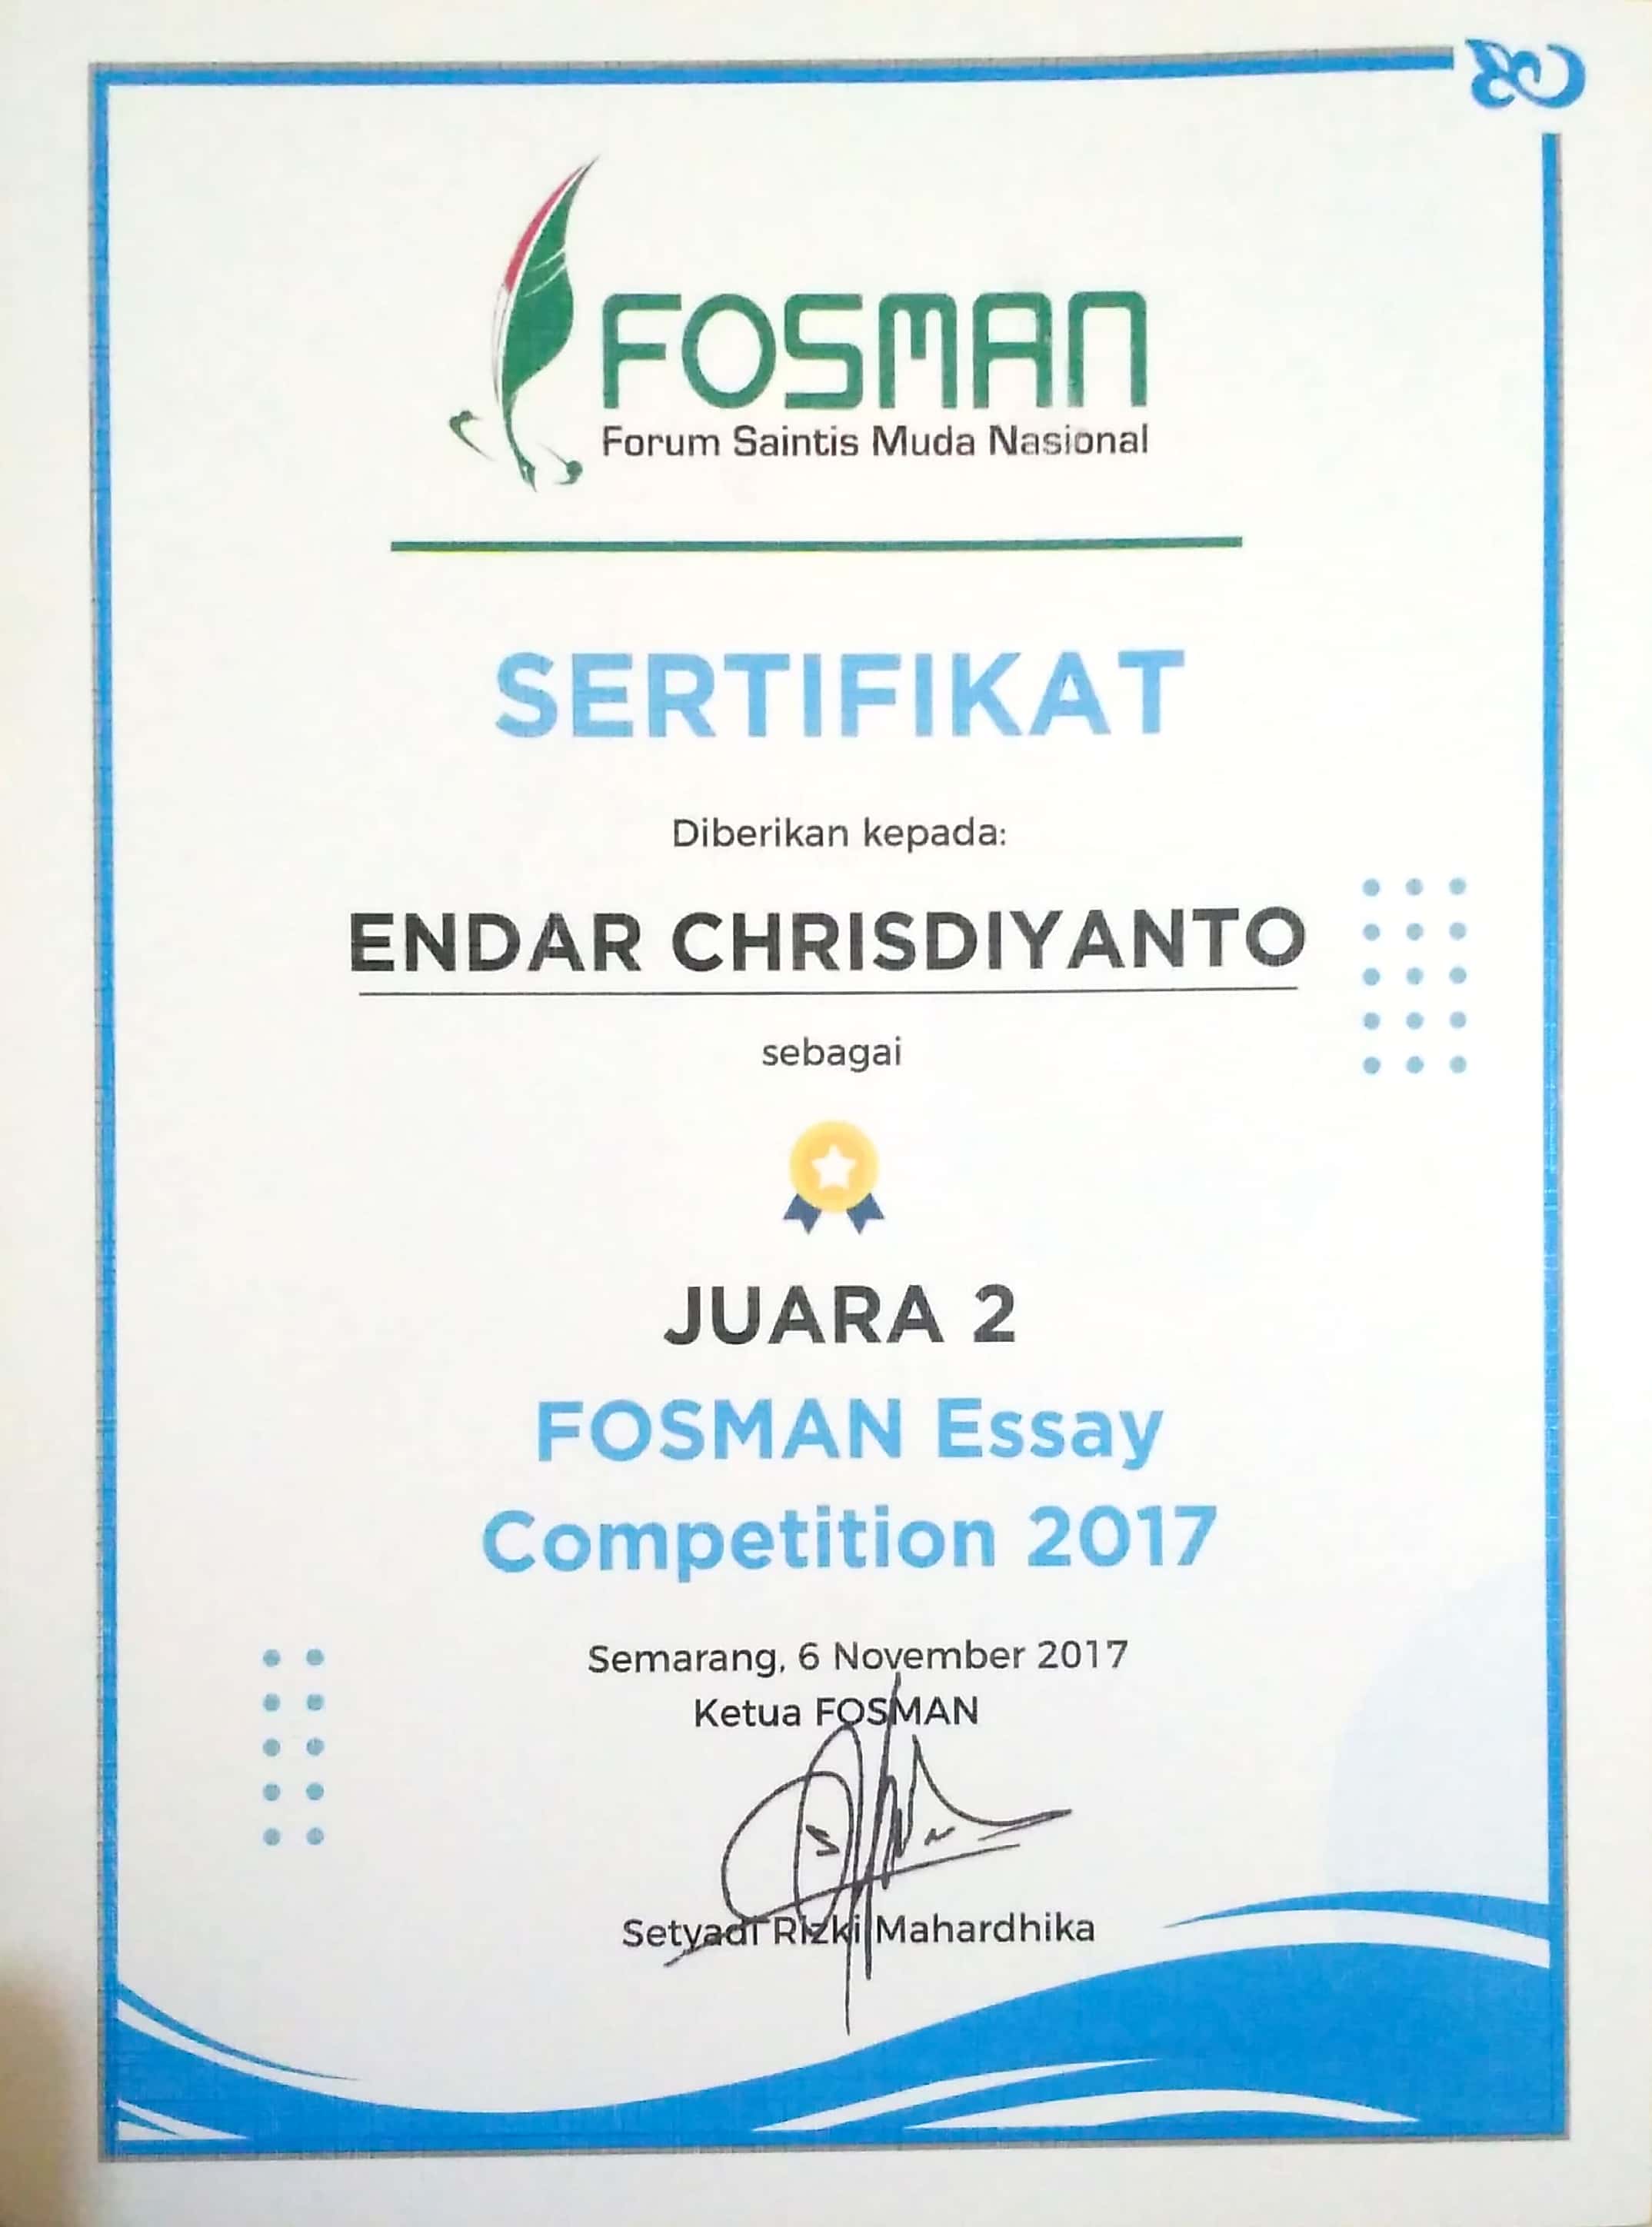 Foto Fosman Essay Competition 2017